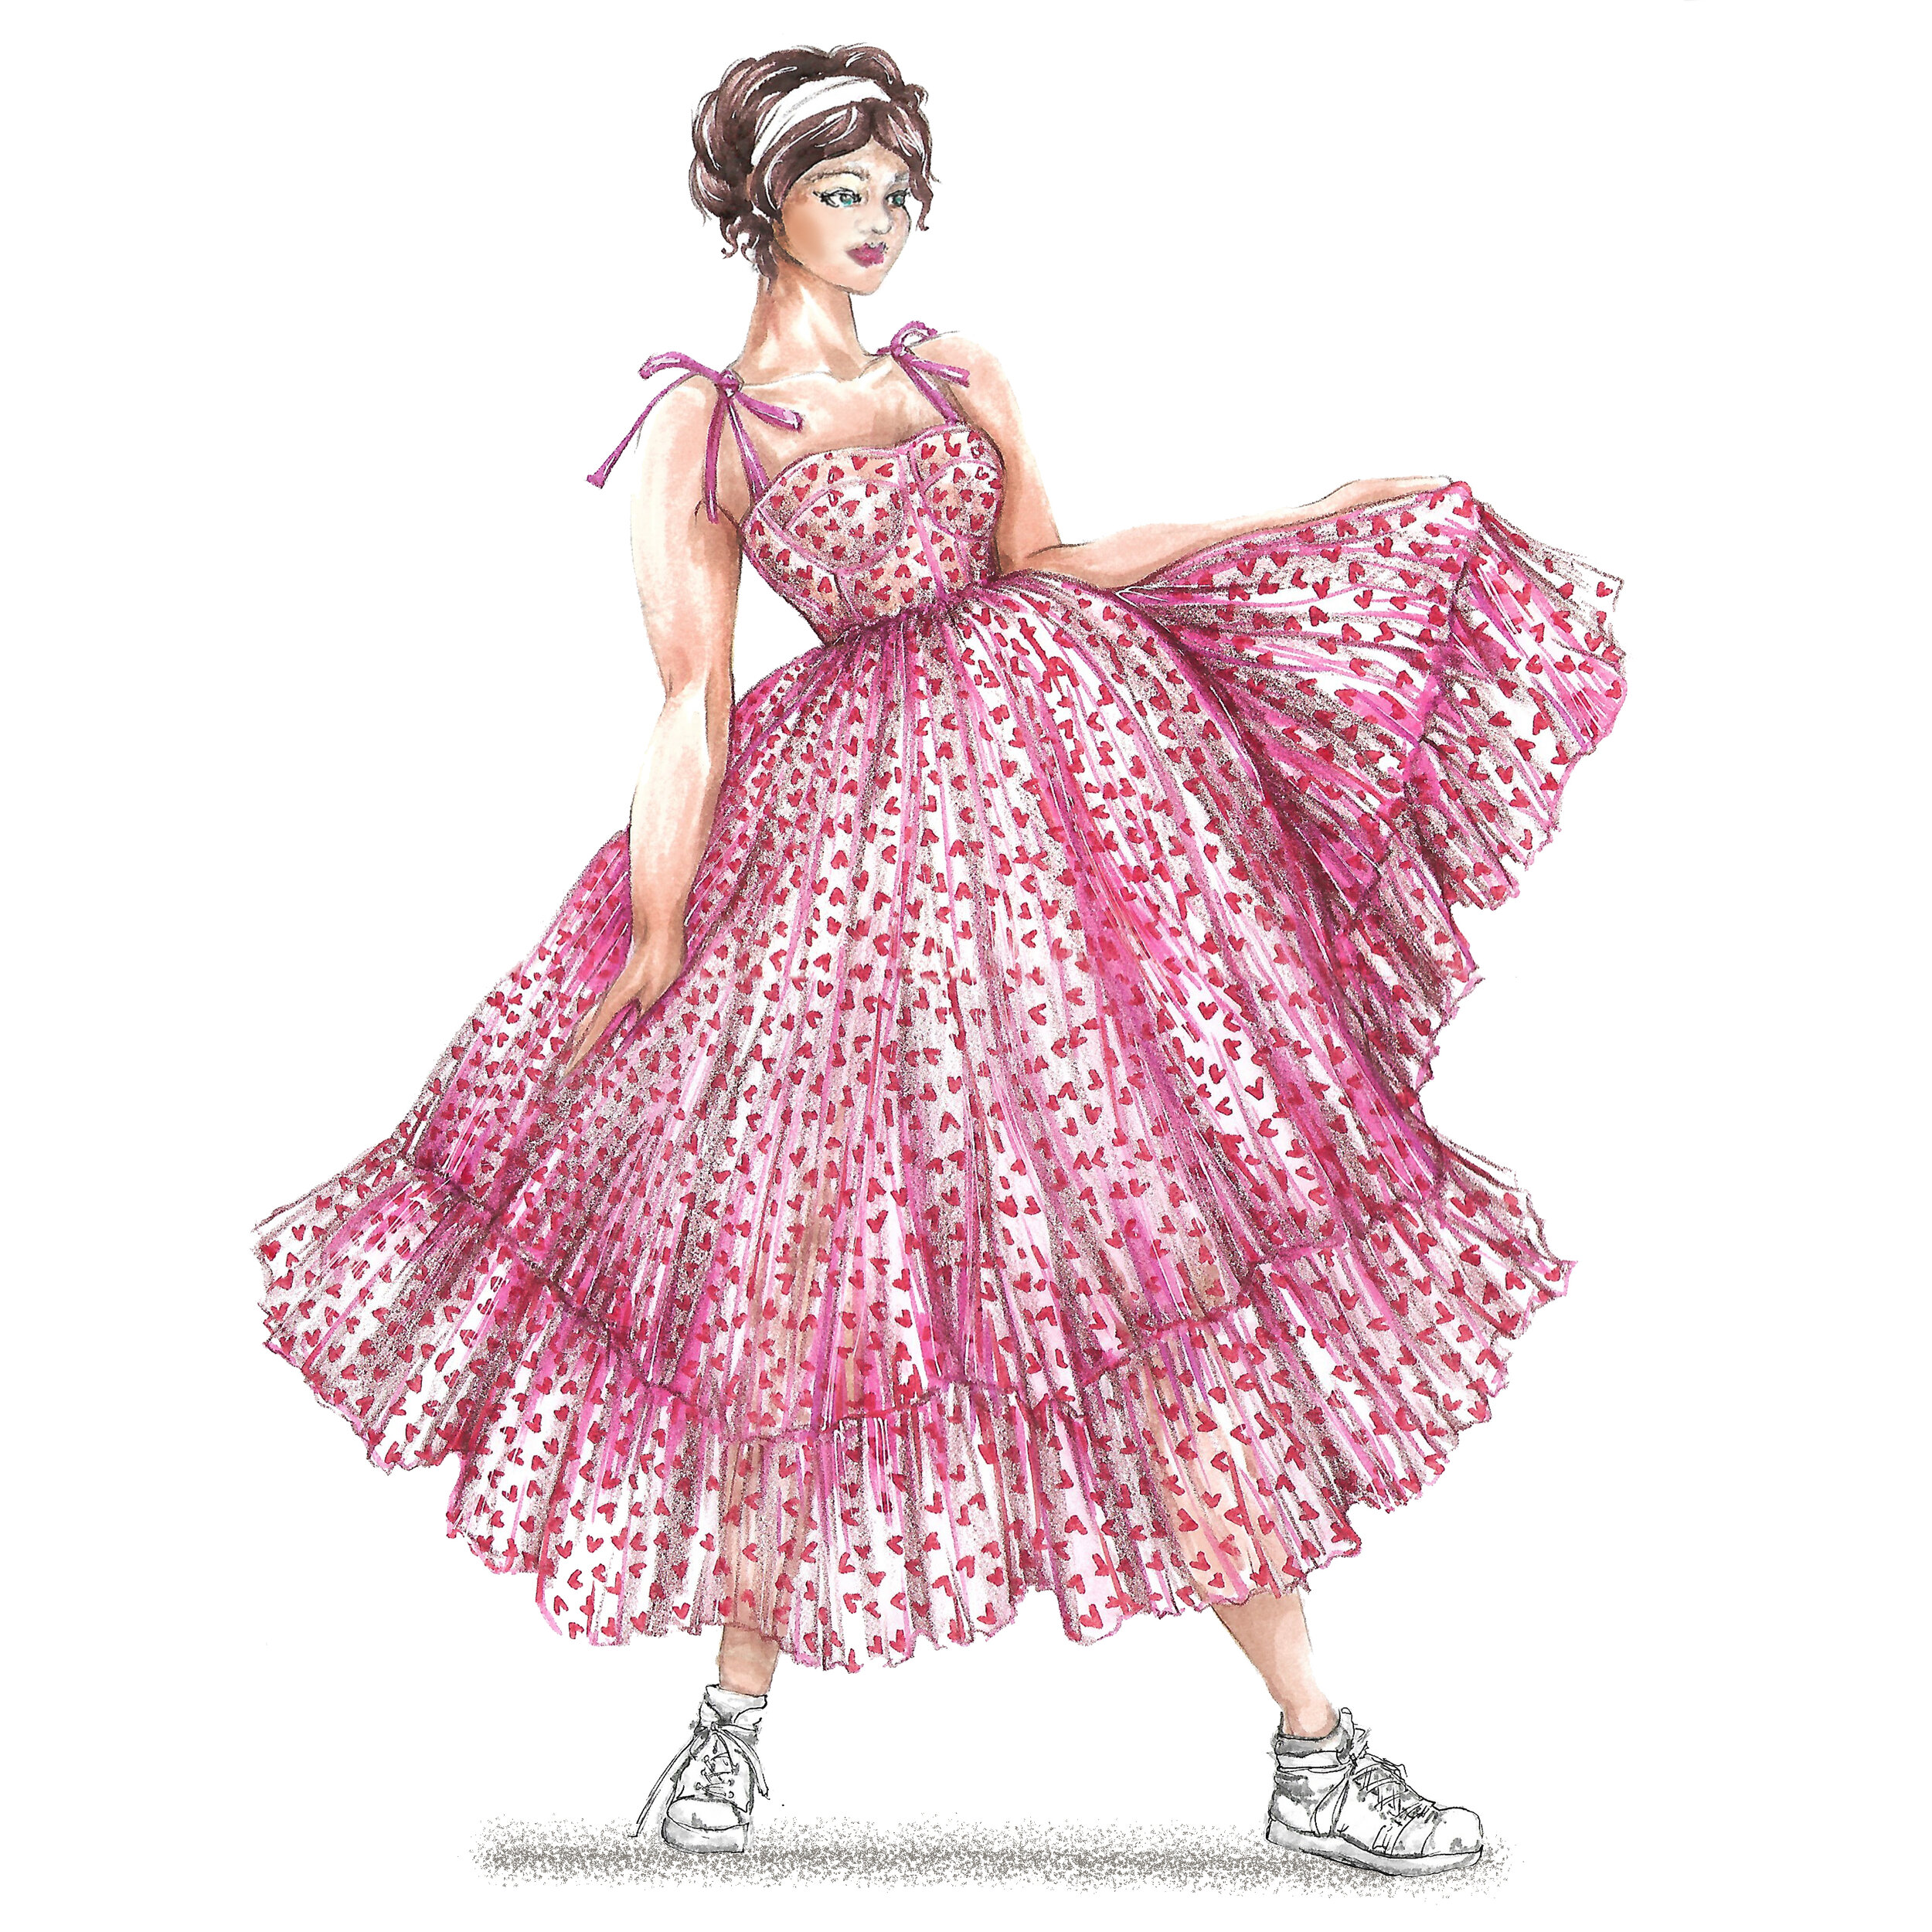 Robyn fashion illustration - Pink heart dress.jpg